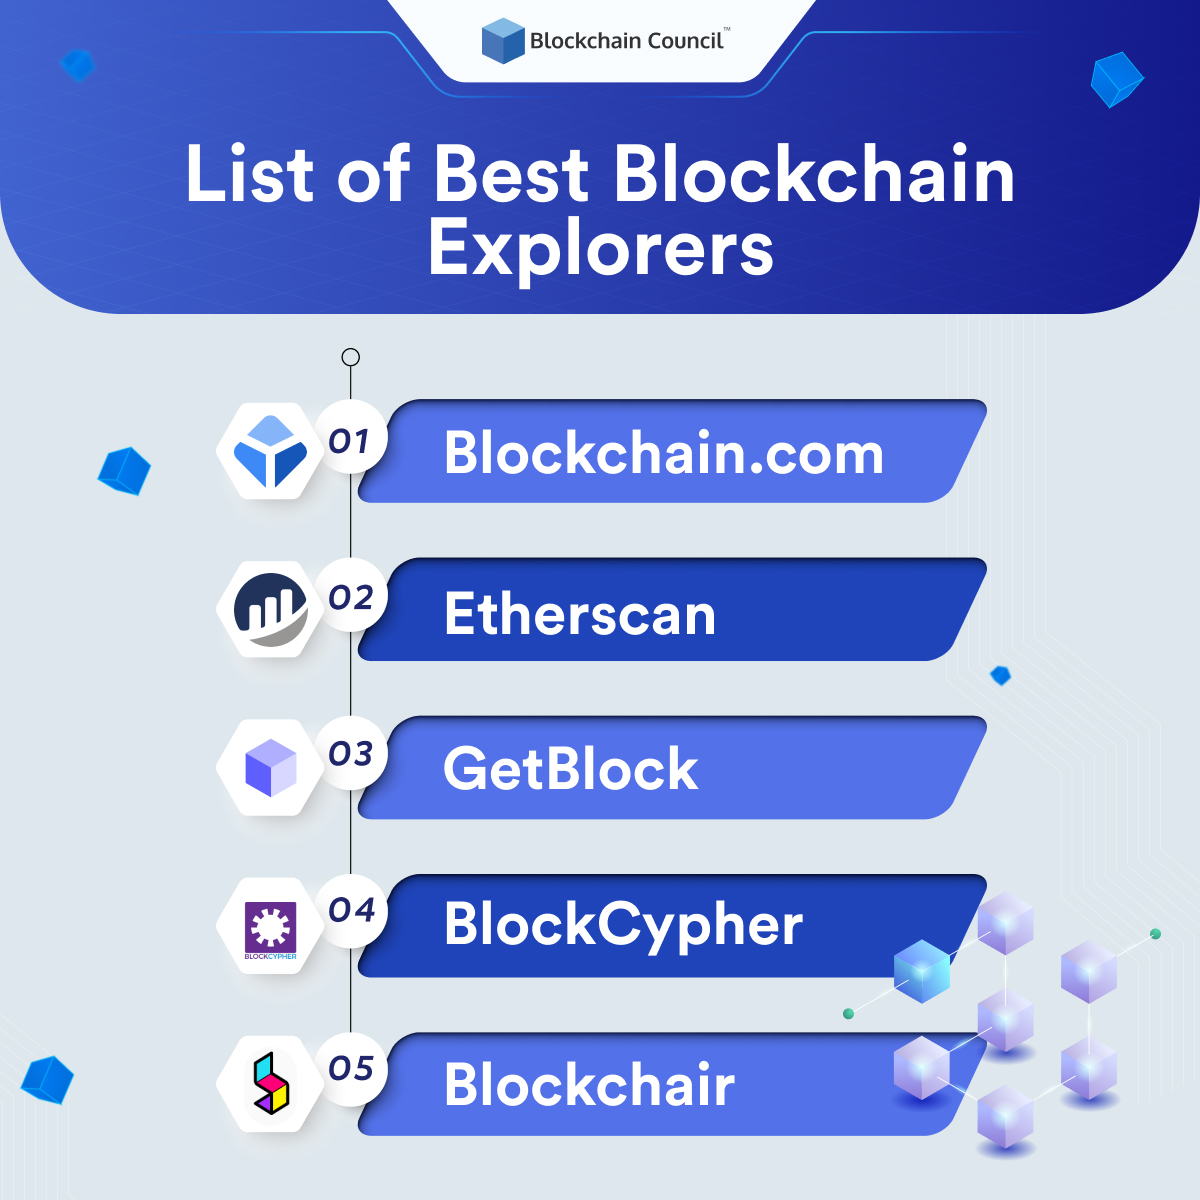 List of Best Blockchain Explorers Infographic by Blockchain Council